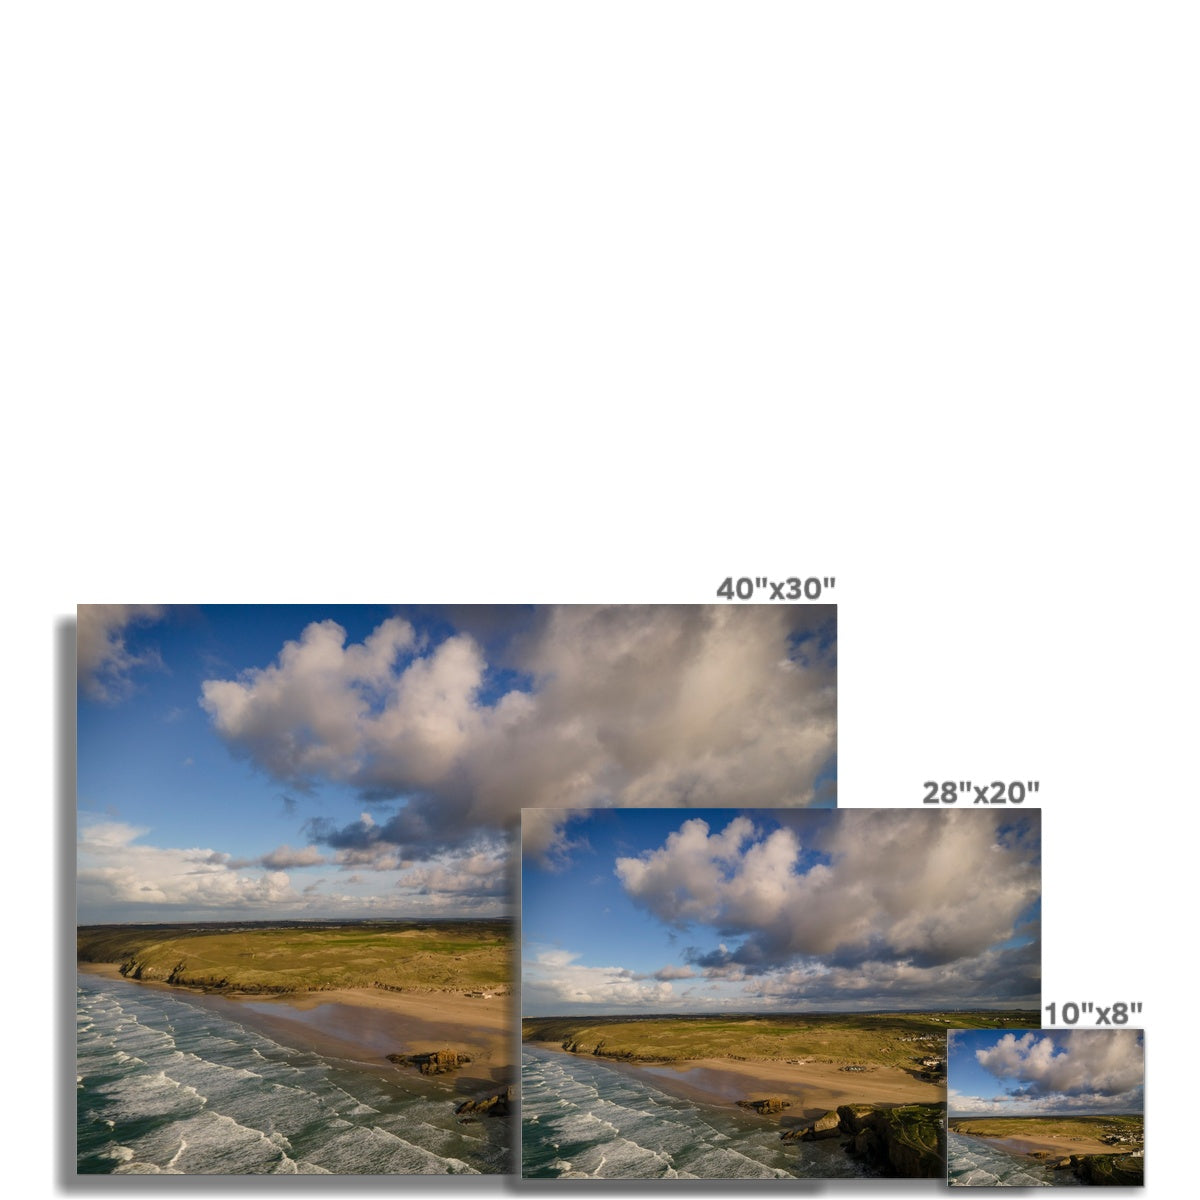 perranporth bay picture sizes